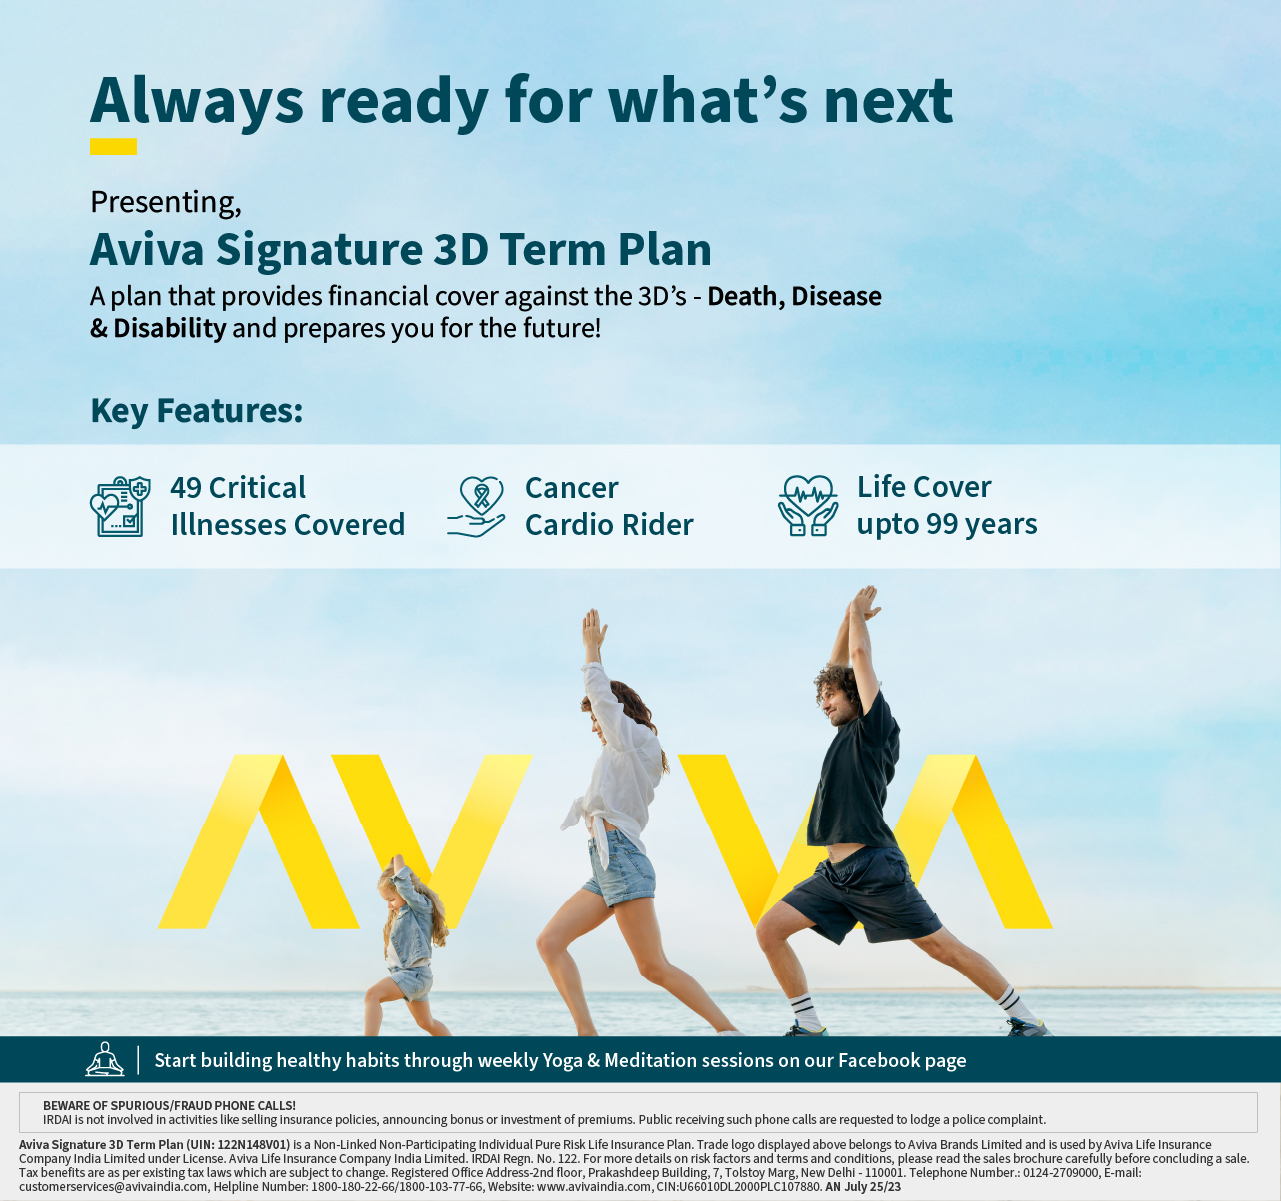 Aviva Signature 3D Term Plan